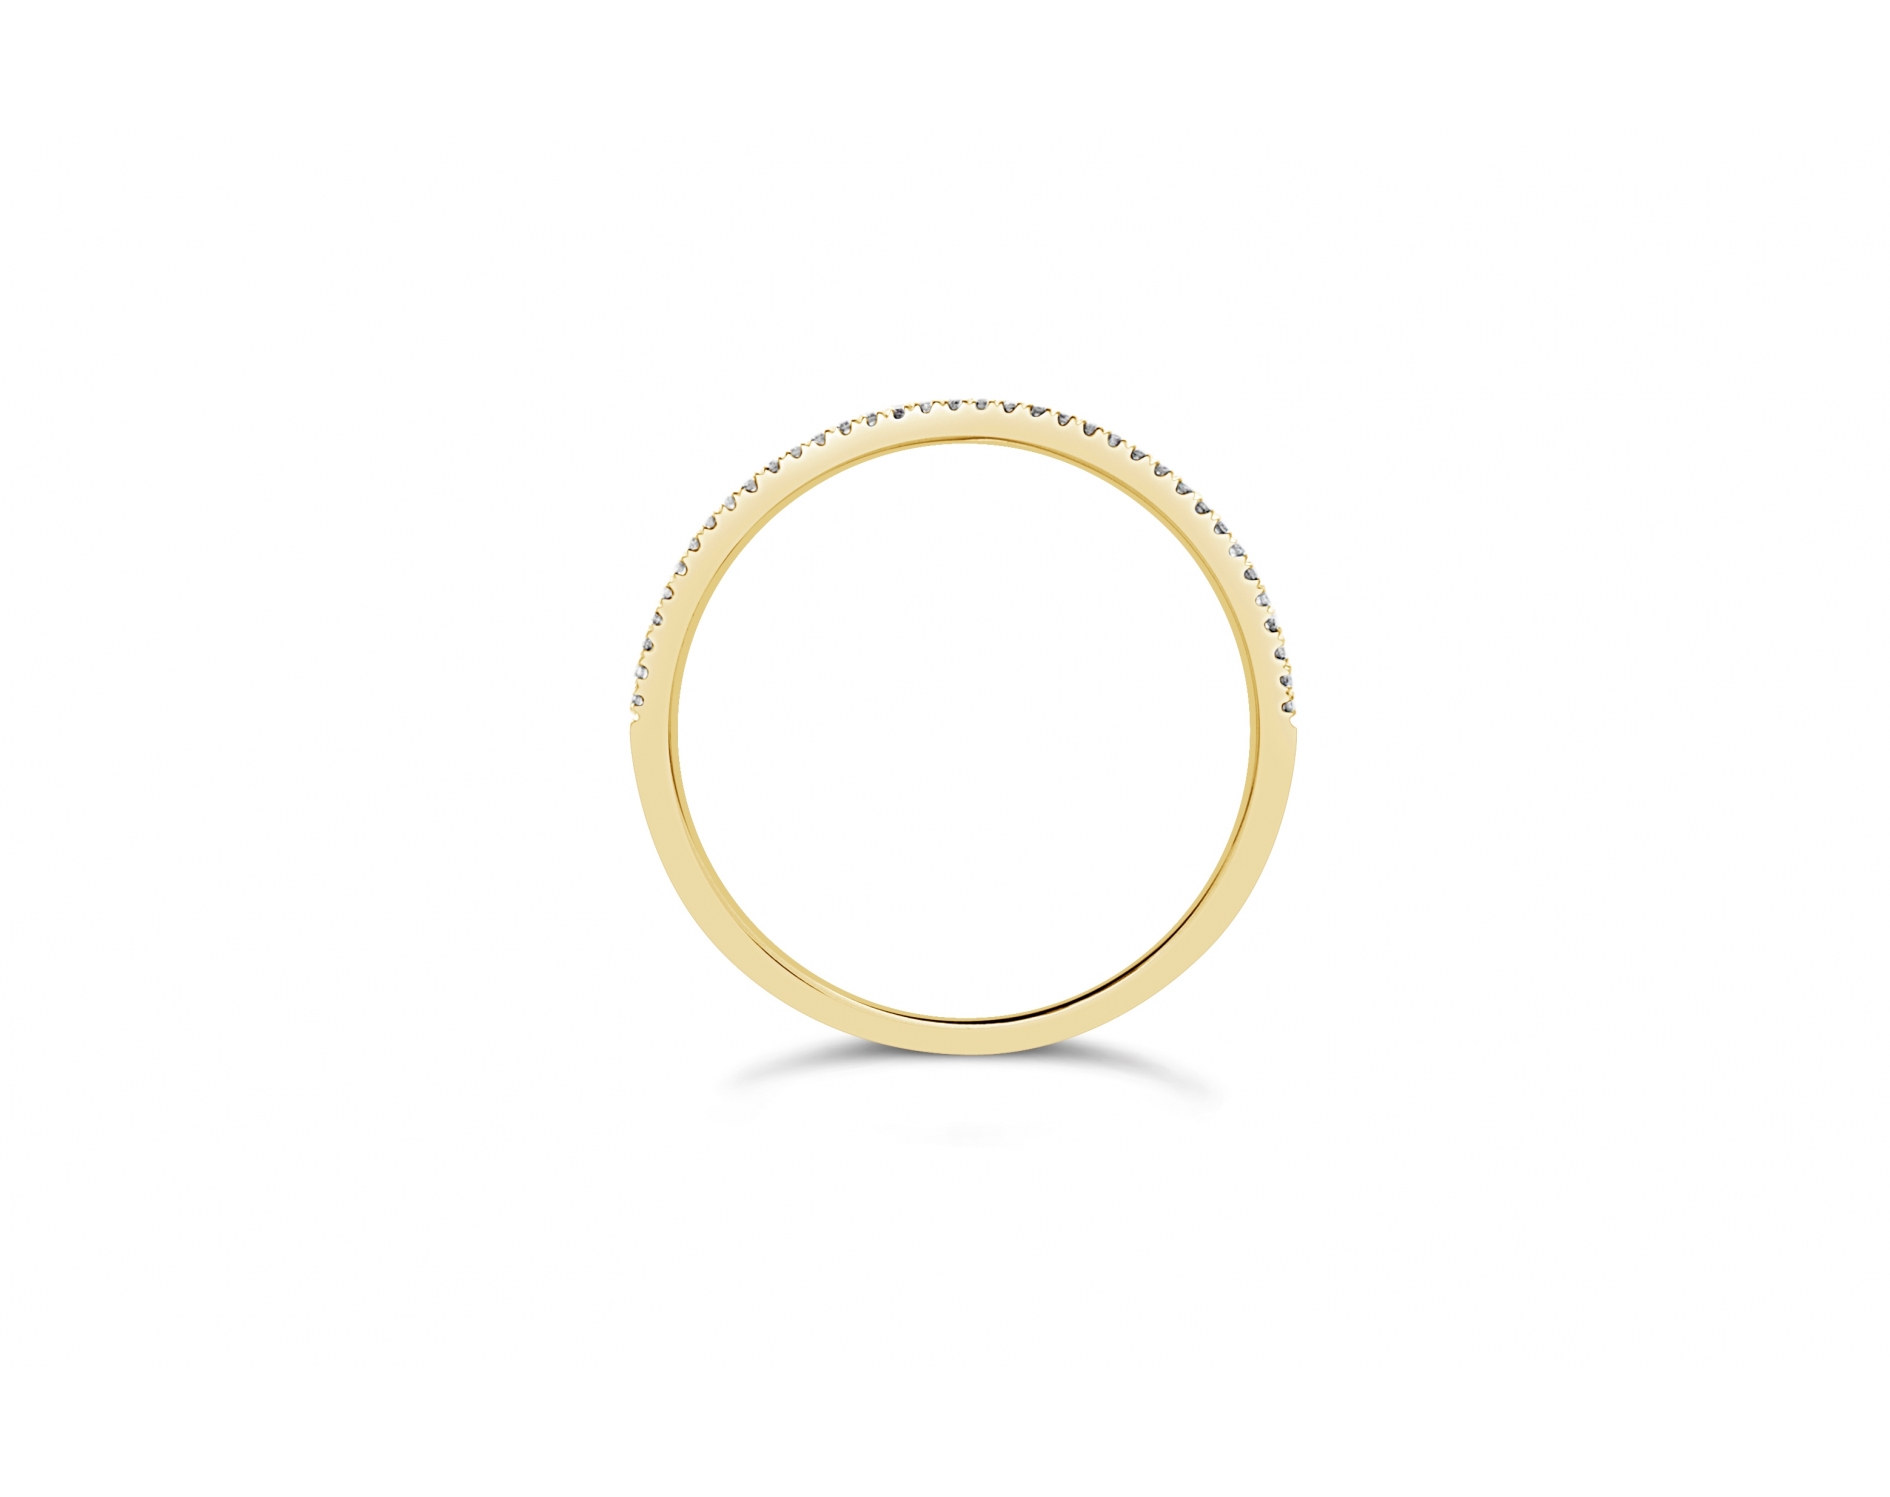 18k yellow gold 4- row half eternity pave set round shaped diamond wedding ring Photos & images